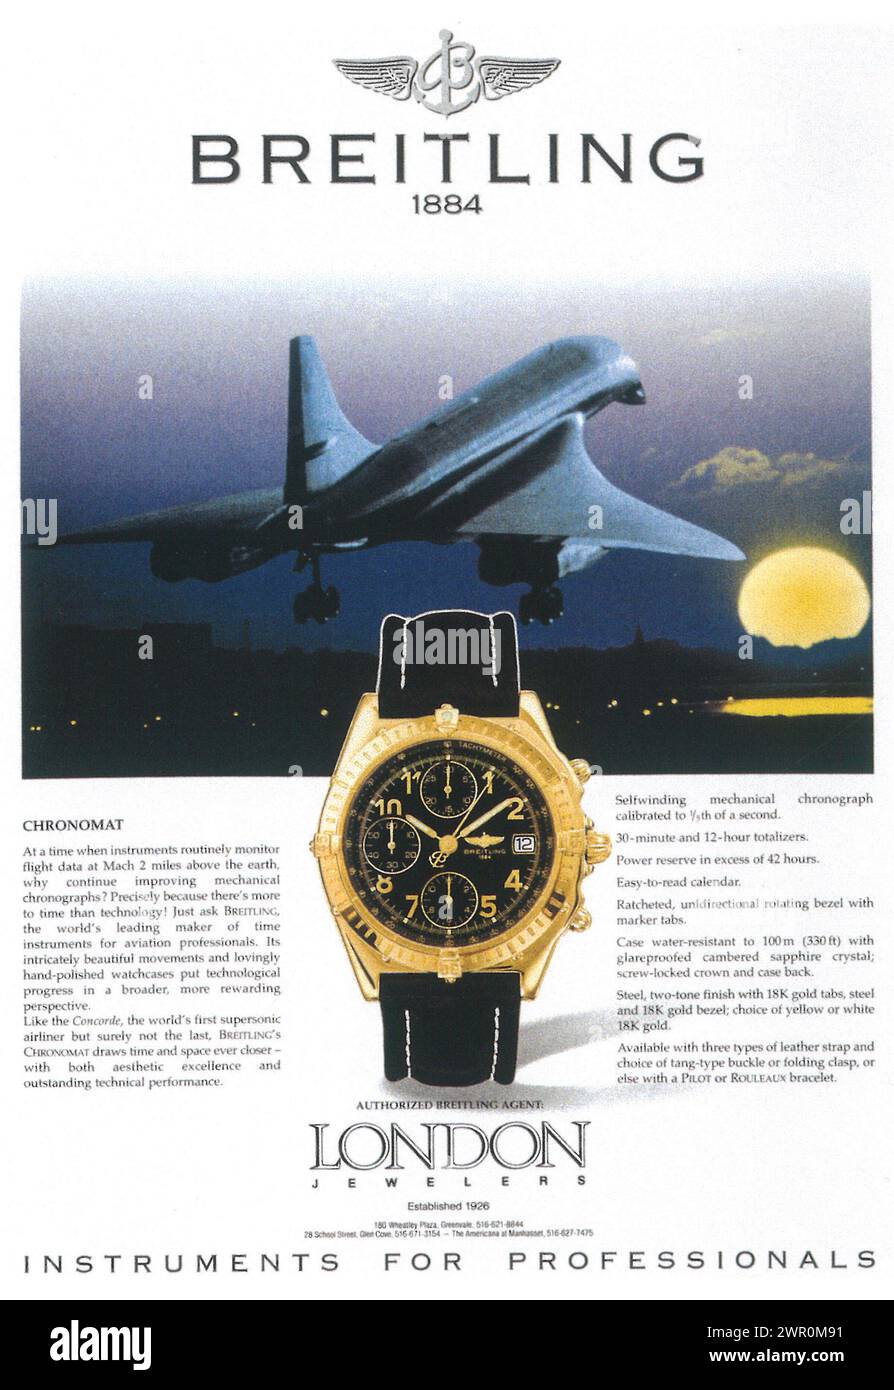 1995 Breitling Chronomat Chronograph print ad Stock Photo